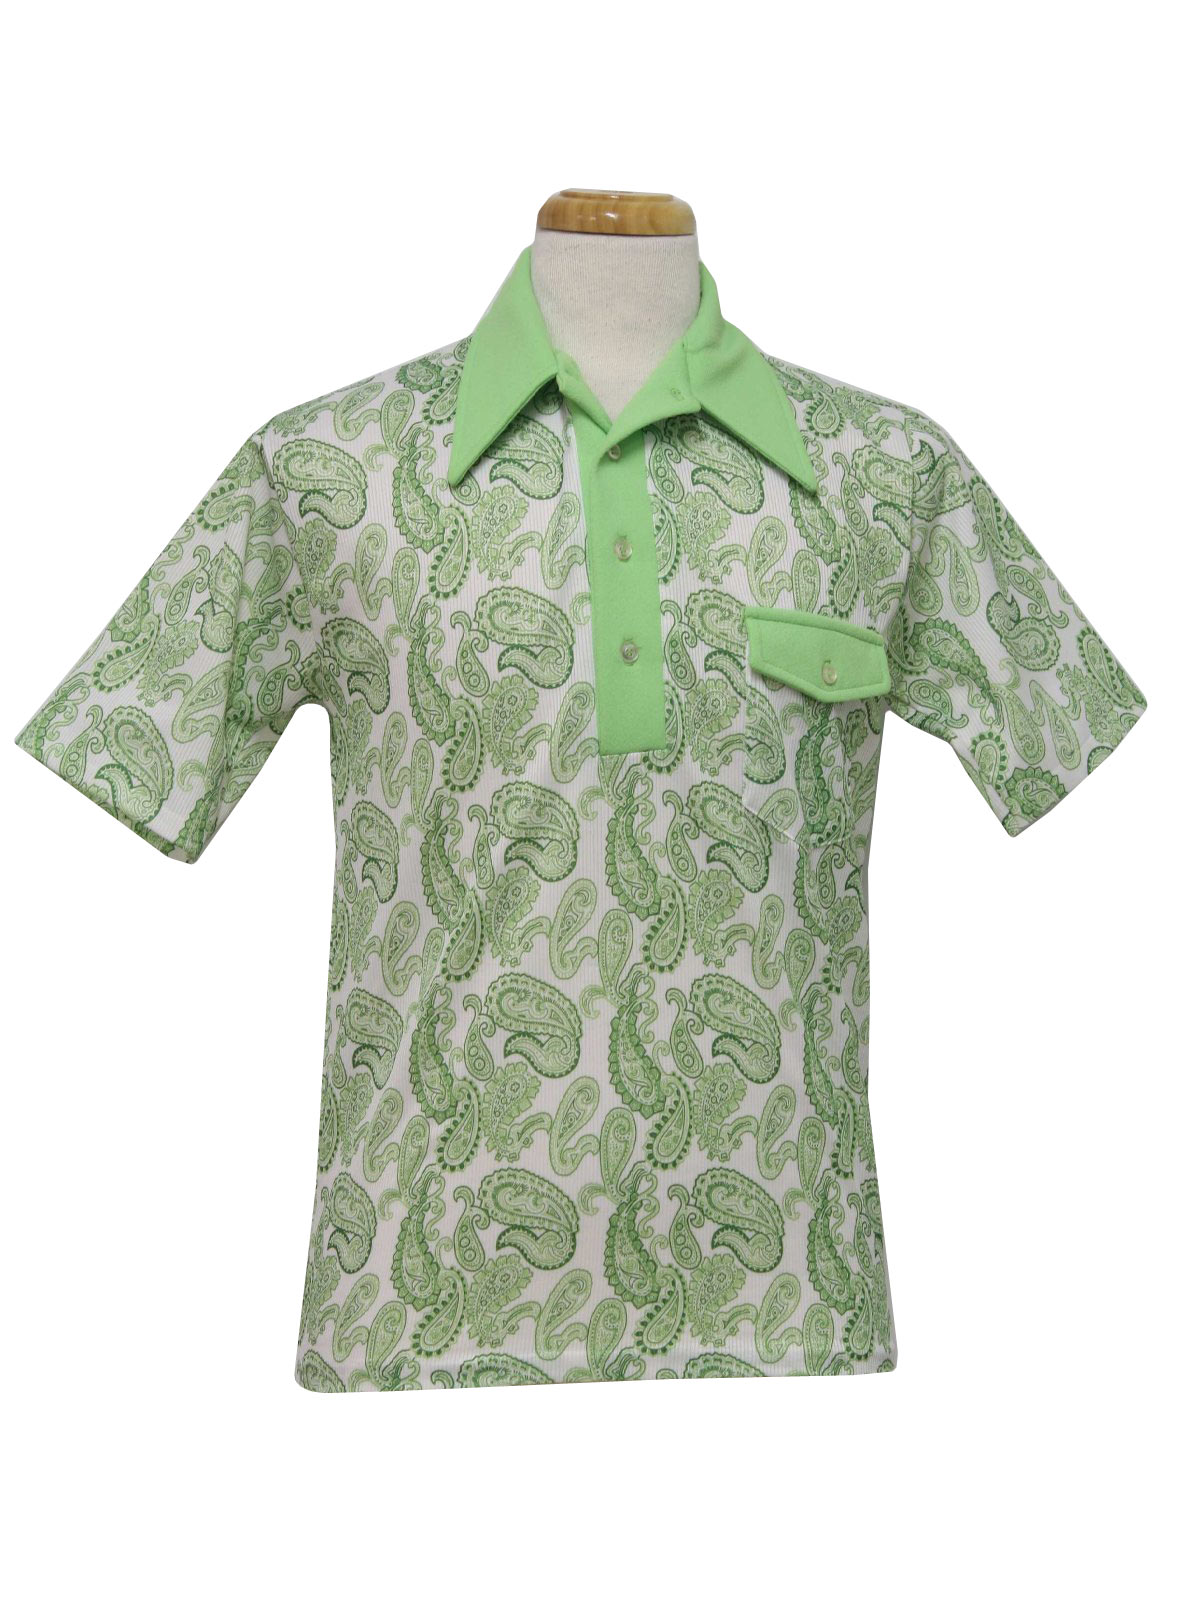 Vintage Atlantis 60's Knit Shirt: Late 60s -Atlantis- Mens lime green ...